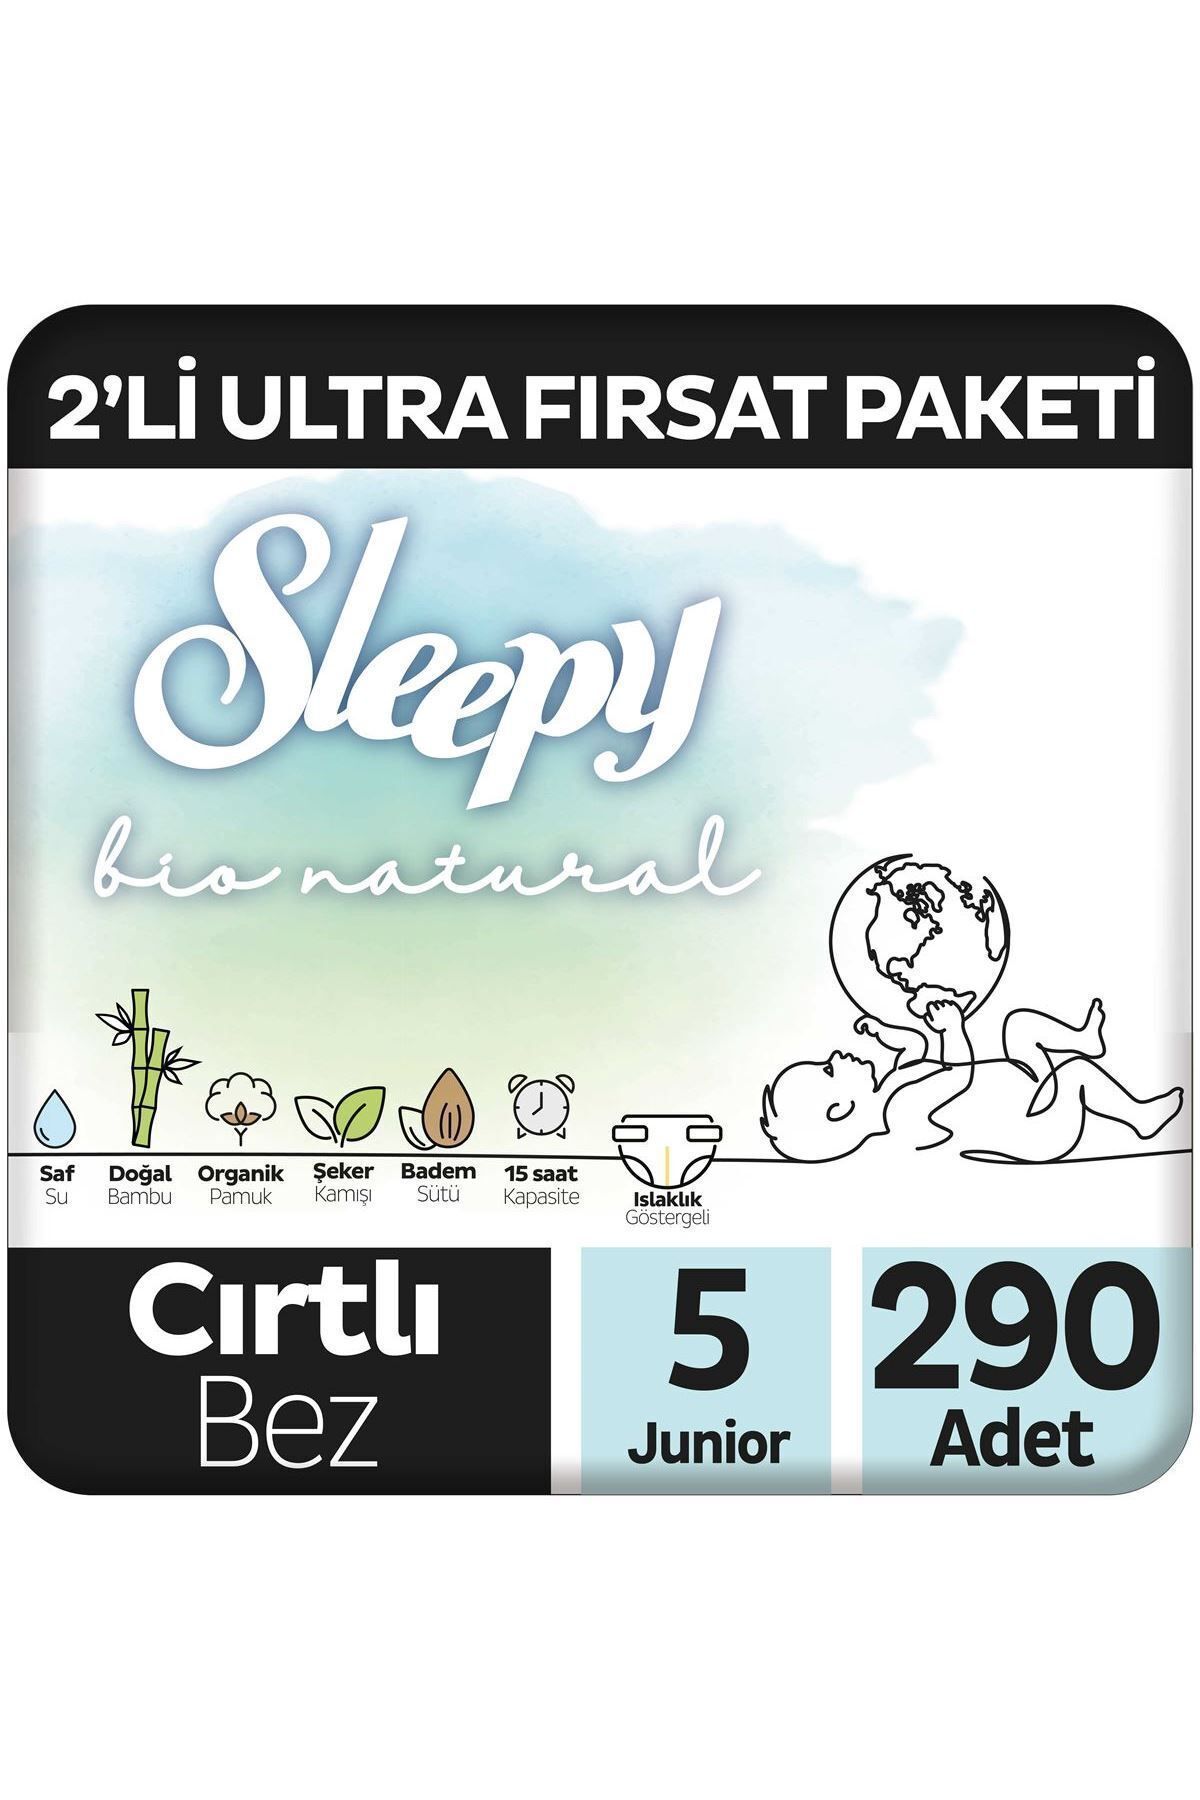 Sleepy Bio Natural 2'Li Ultra Fırsat Paketi Bebek Bezi 5 Numara Junior 290 Adet